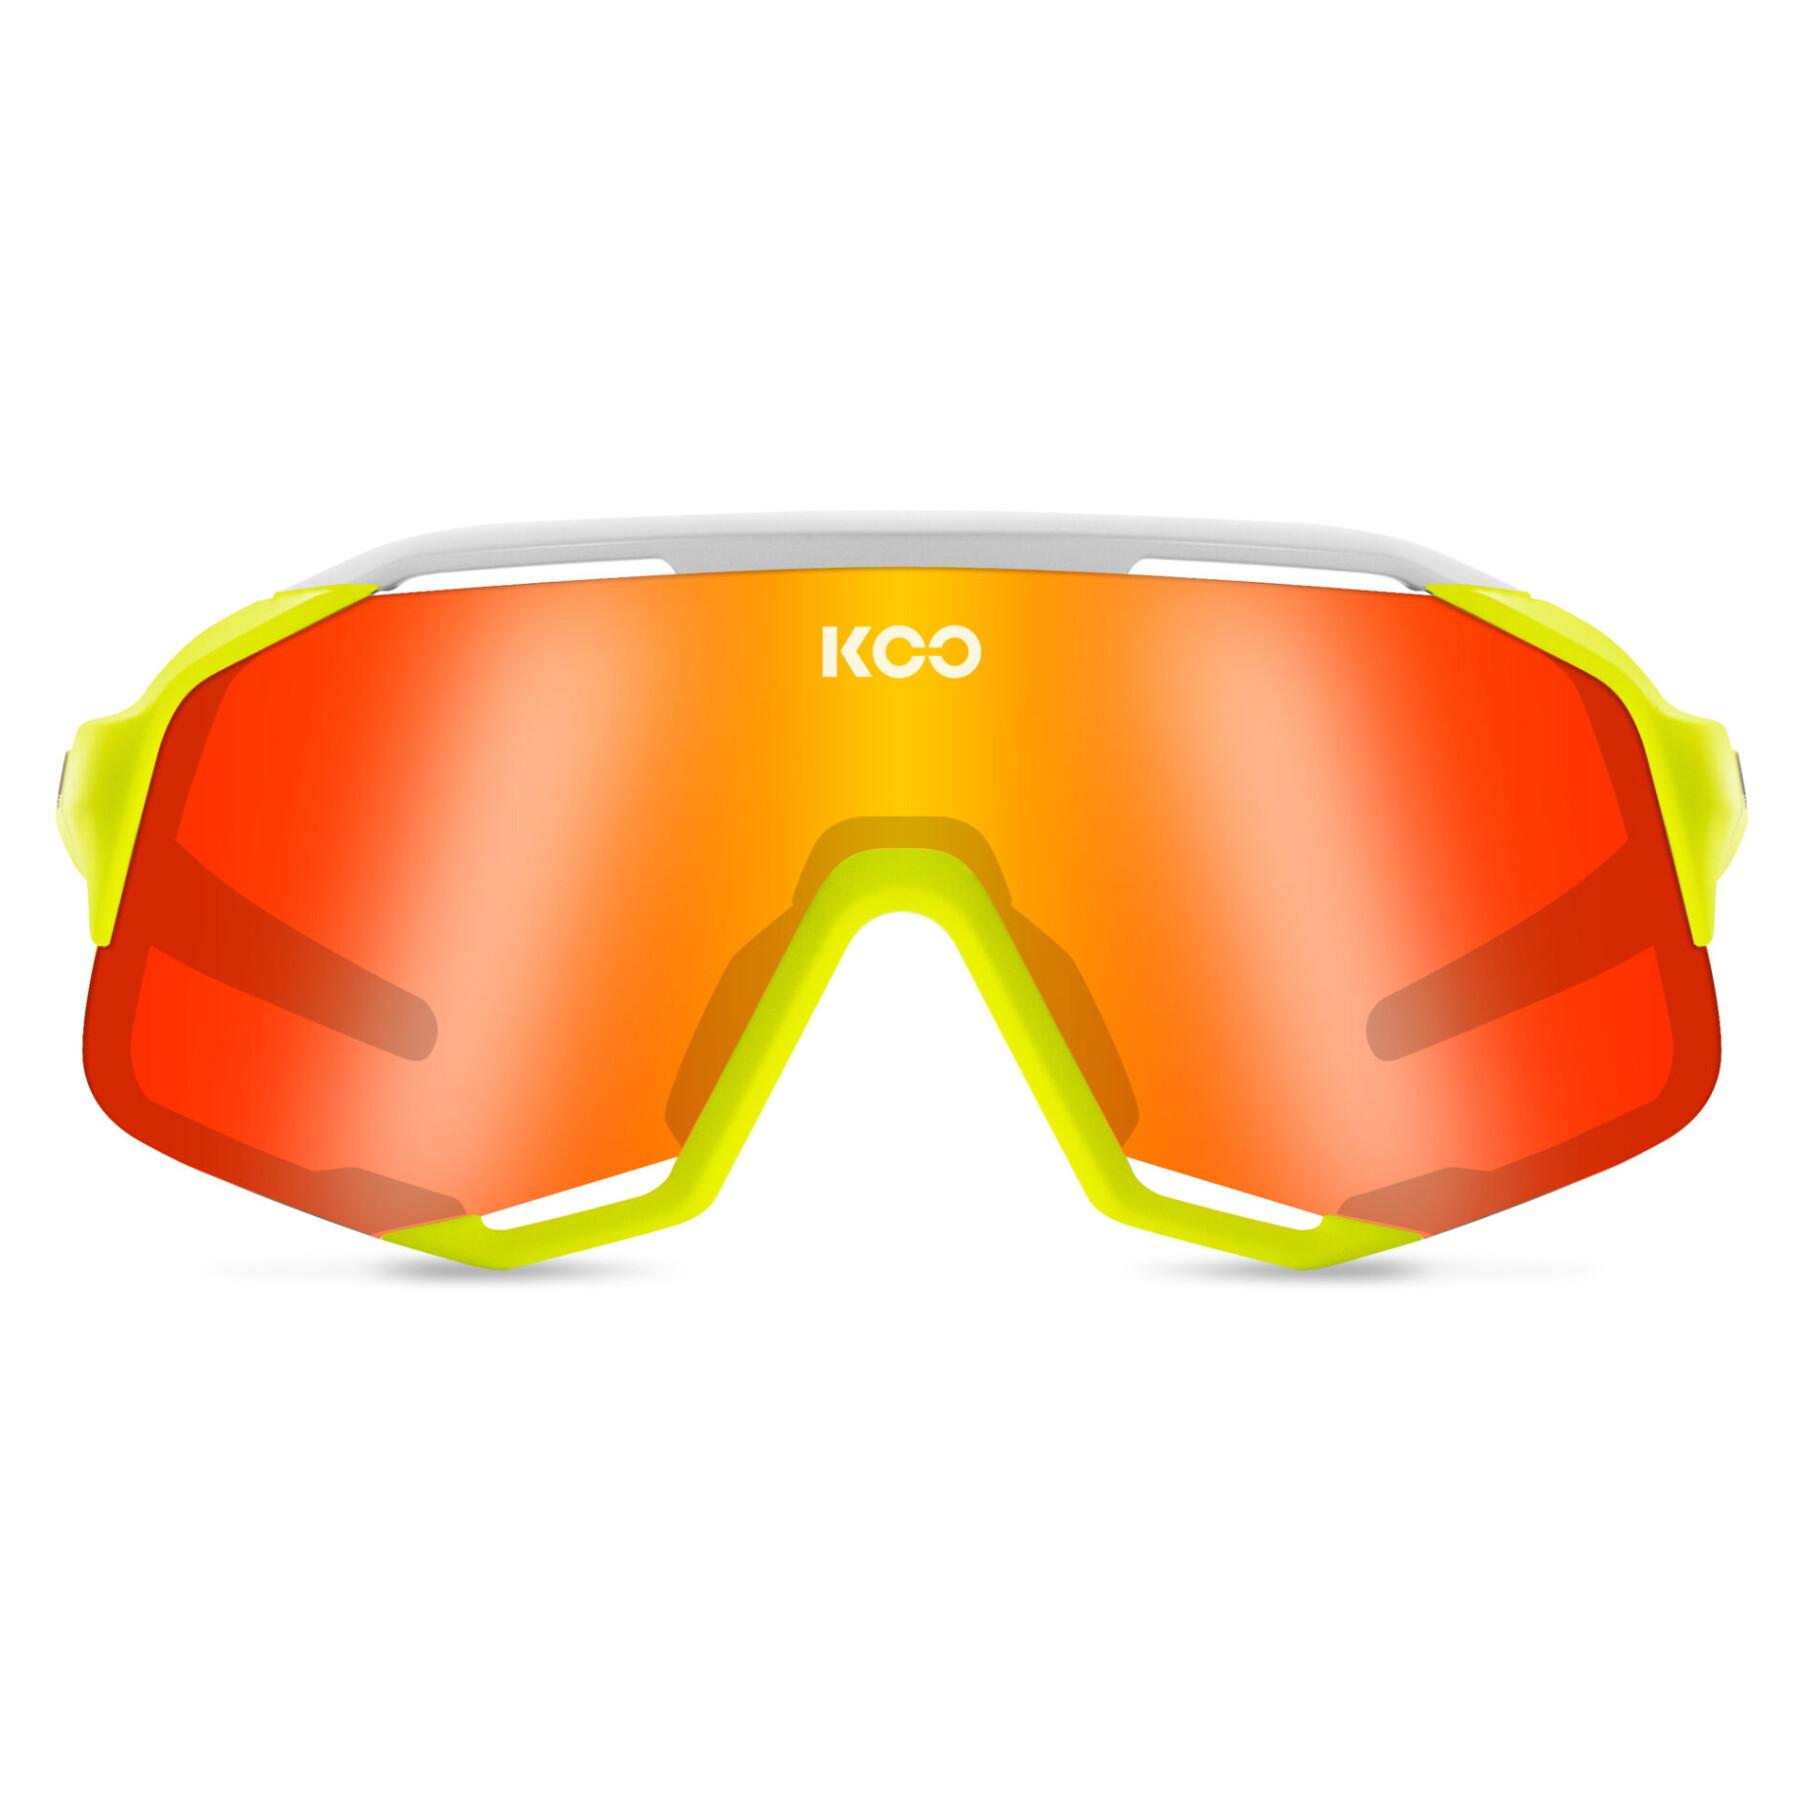 Occhiali da sole Koo demos energy capsule collection